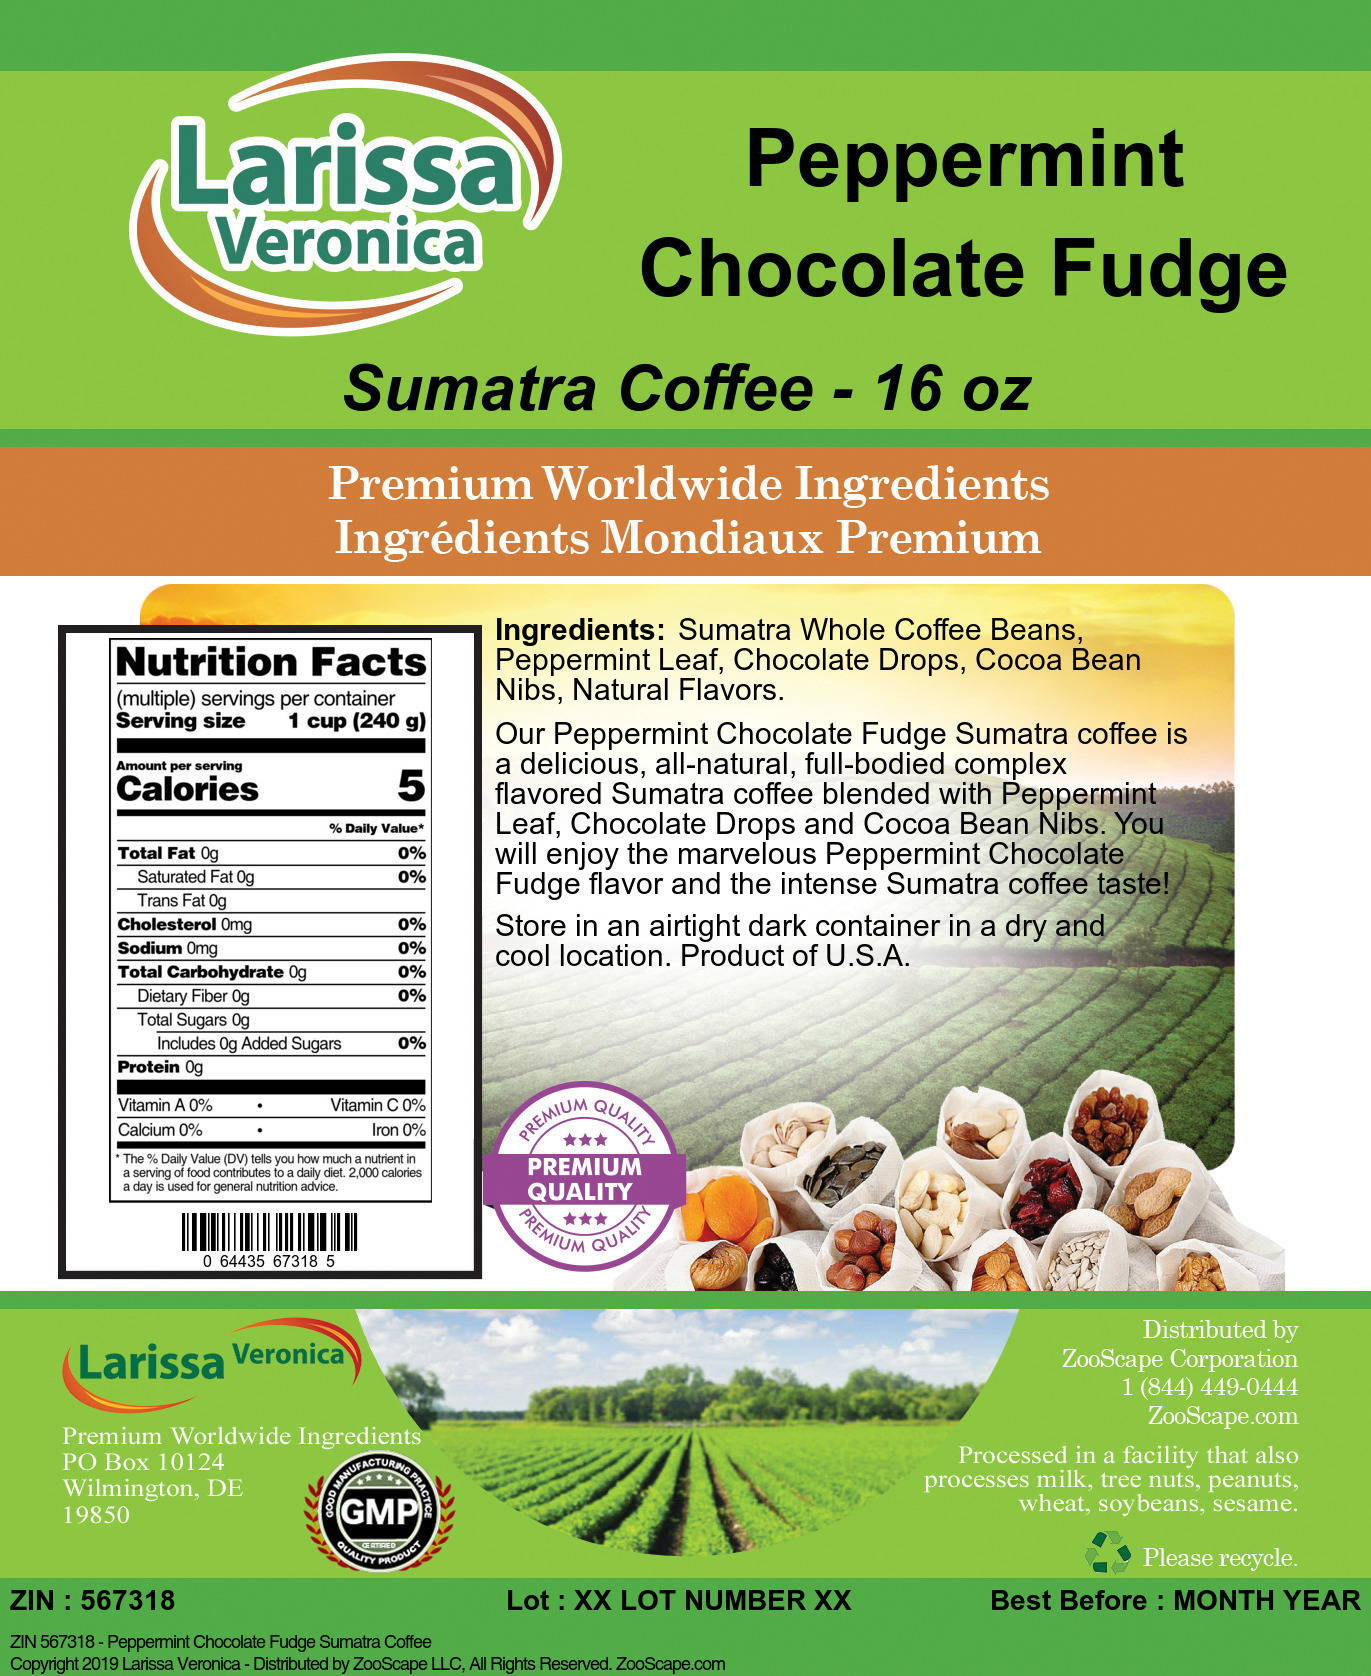 Peppermint Chocolate Fudge Sumatra Coffee - Label